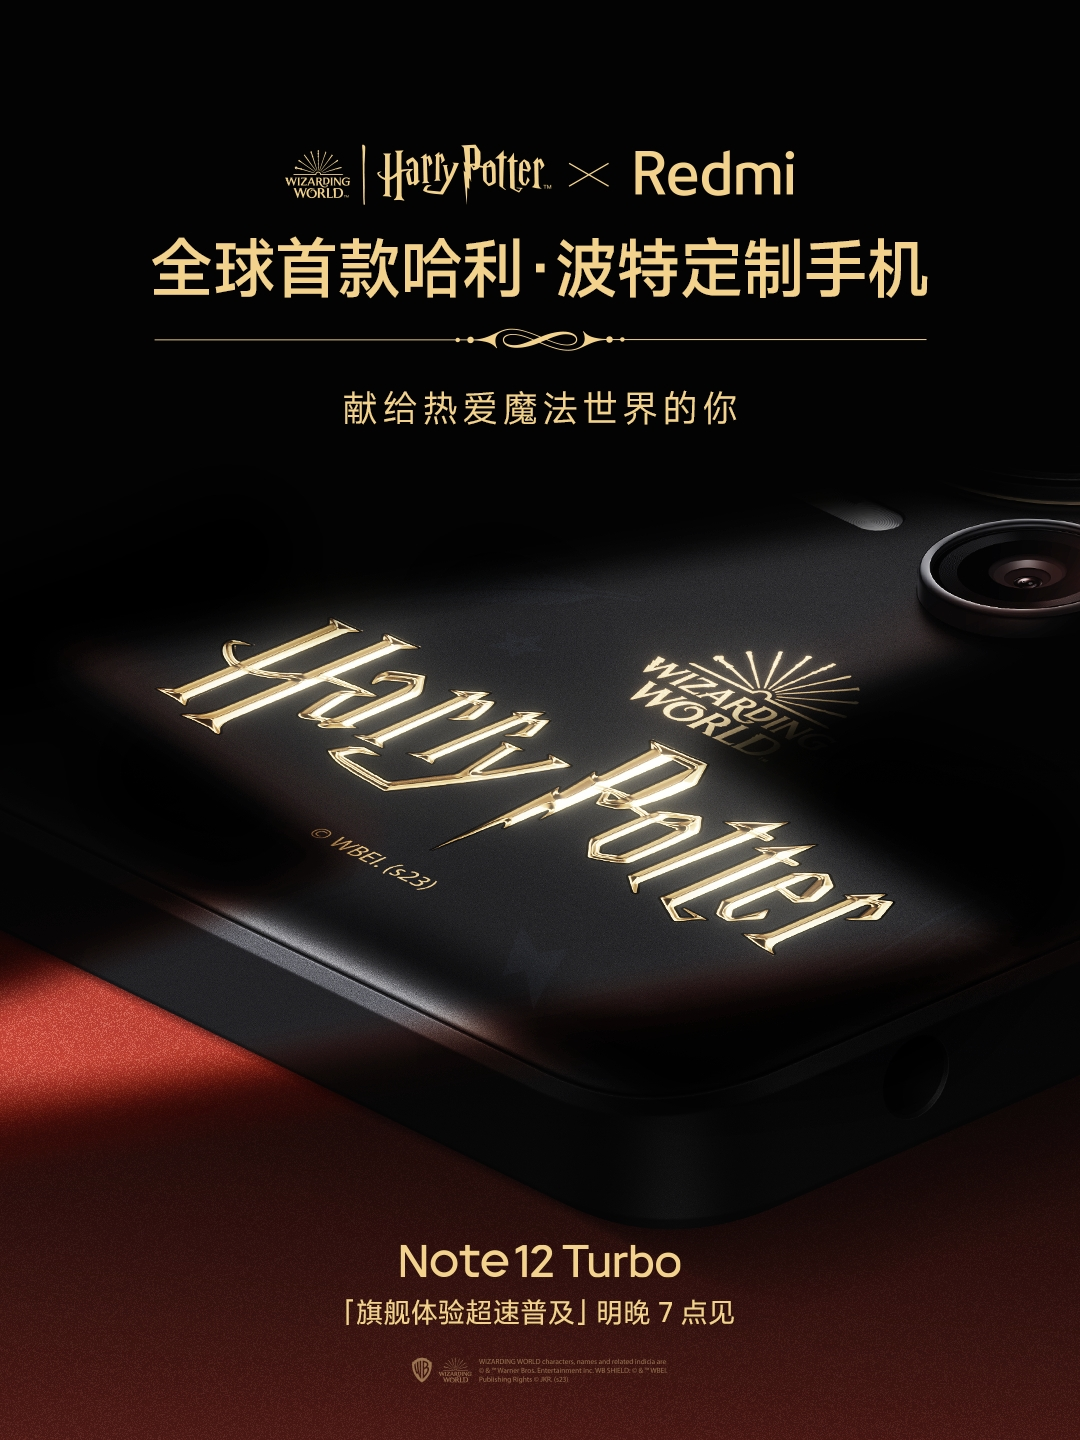 Xiaomi анонсировала смартфон в стиле Гарри Поттера Redmi Note 12 Turbo Harry Potter Custom Edition